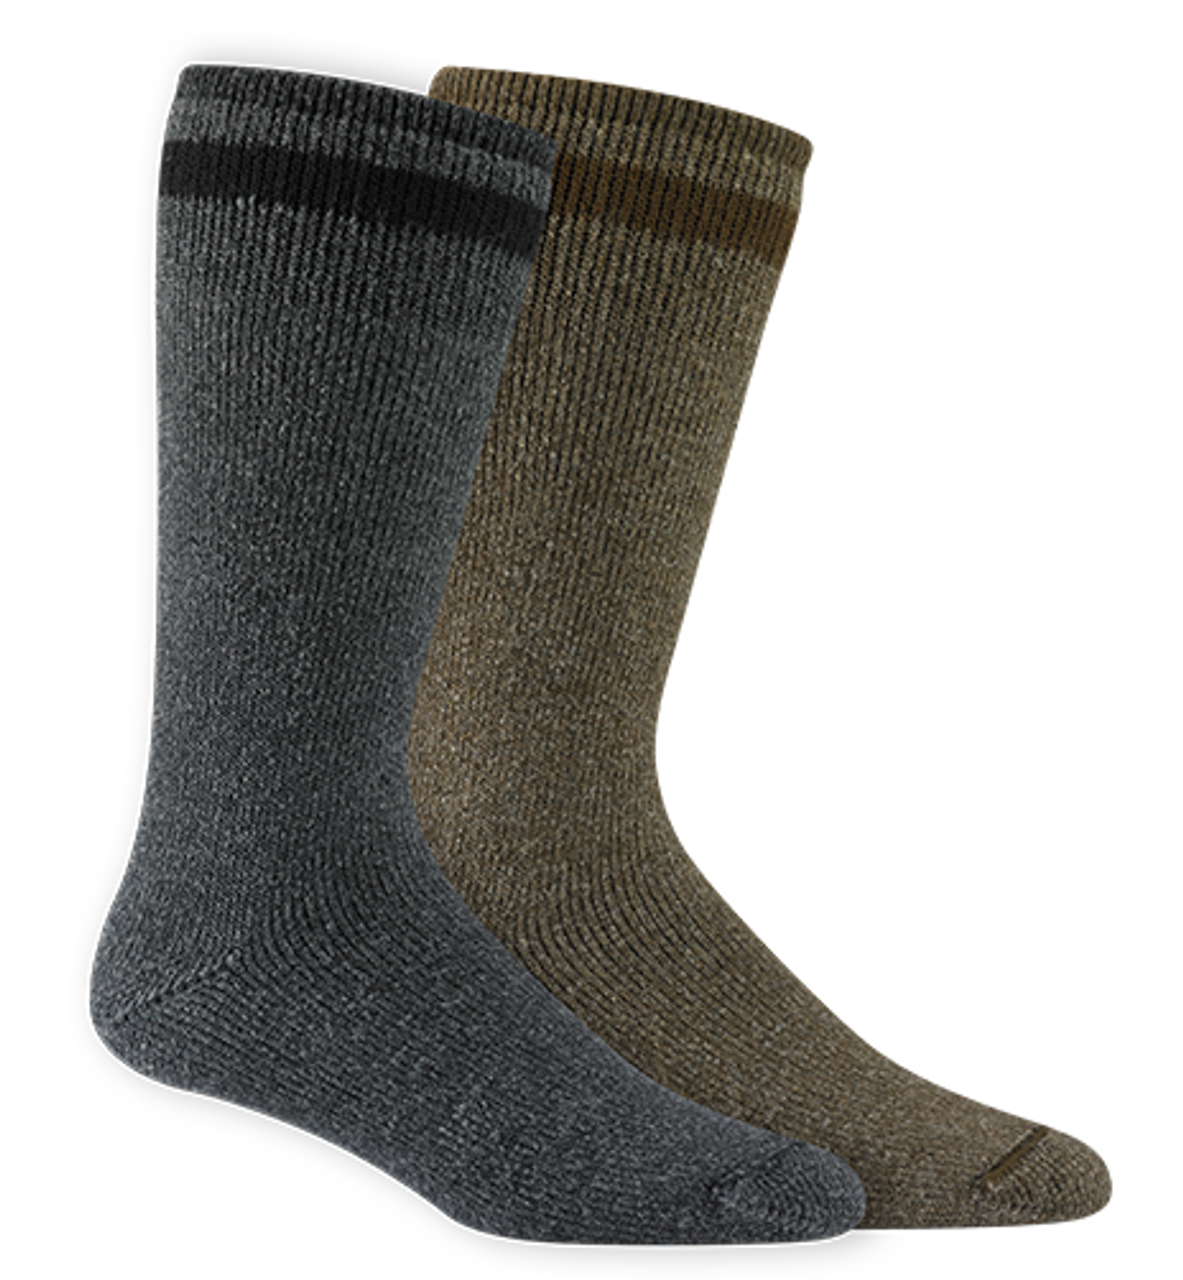 Wigwam Men's Super Boot Sock (2 Pack)